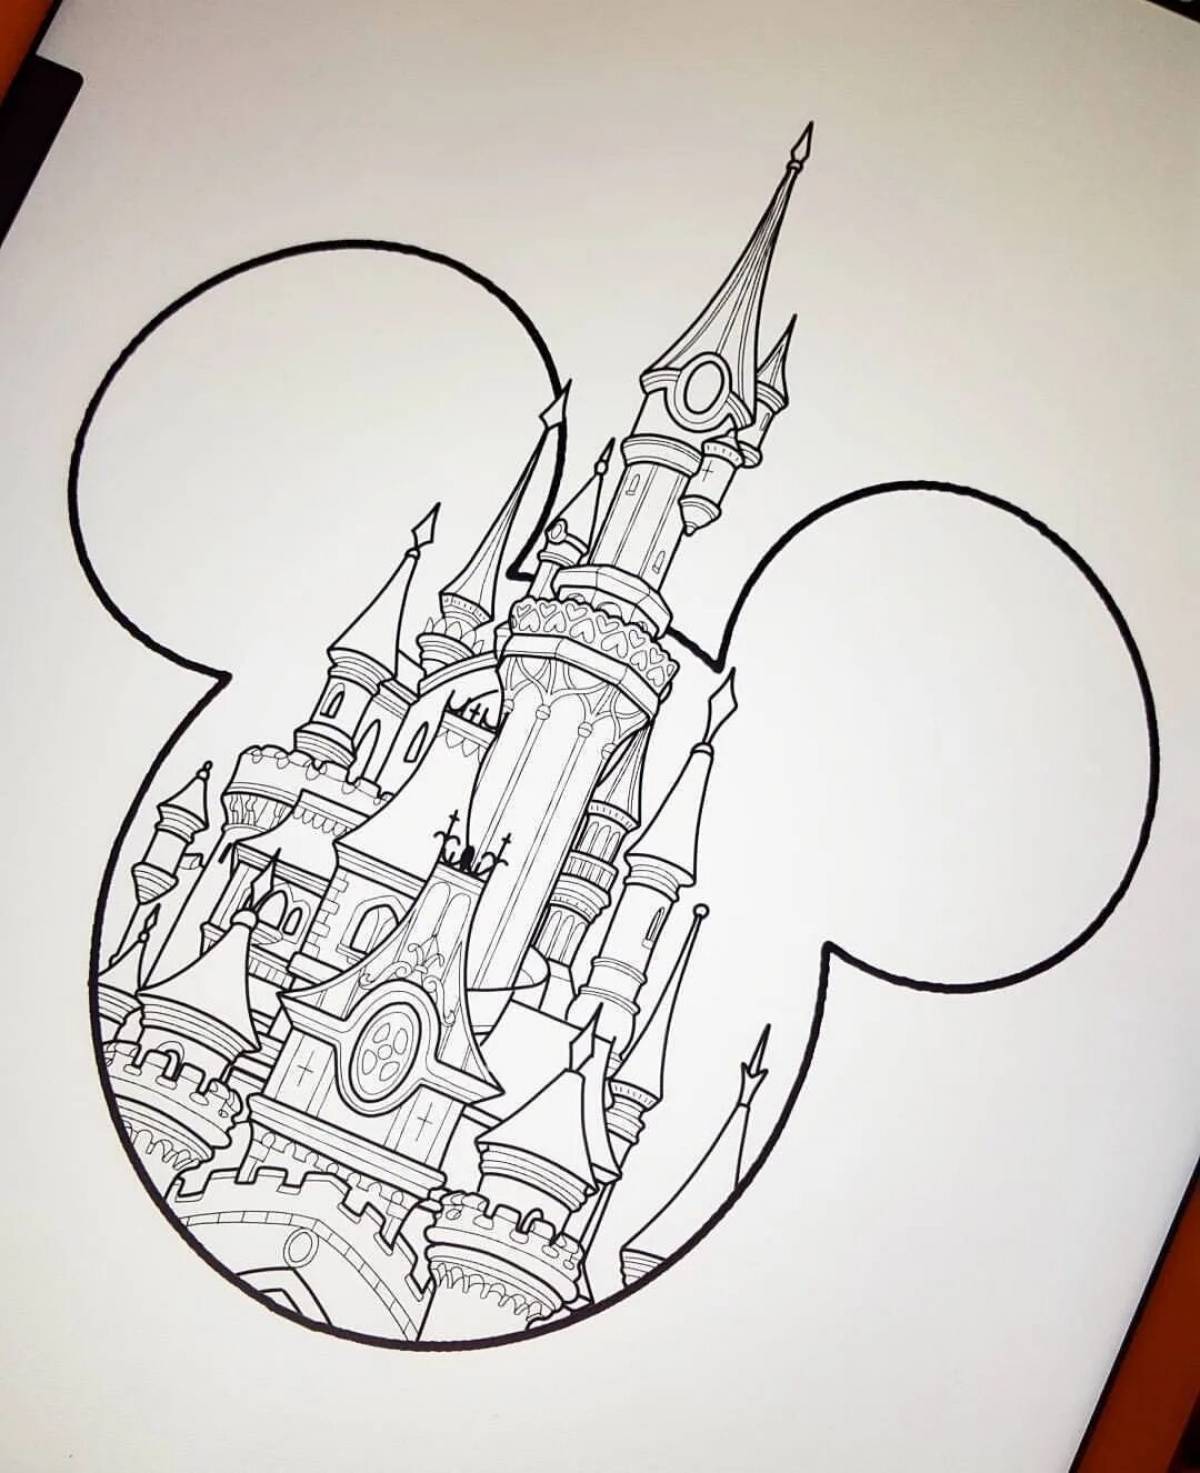 Disneyland holiday coloring page